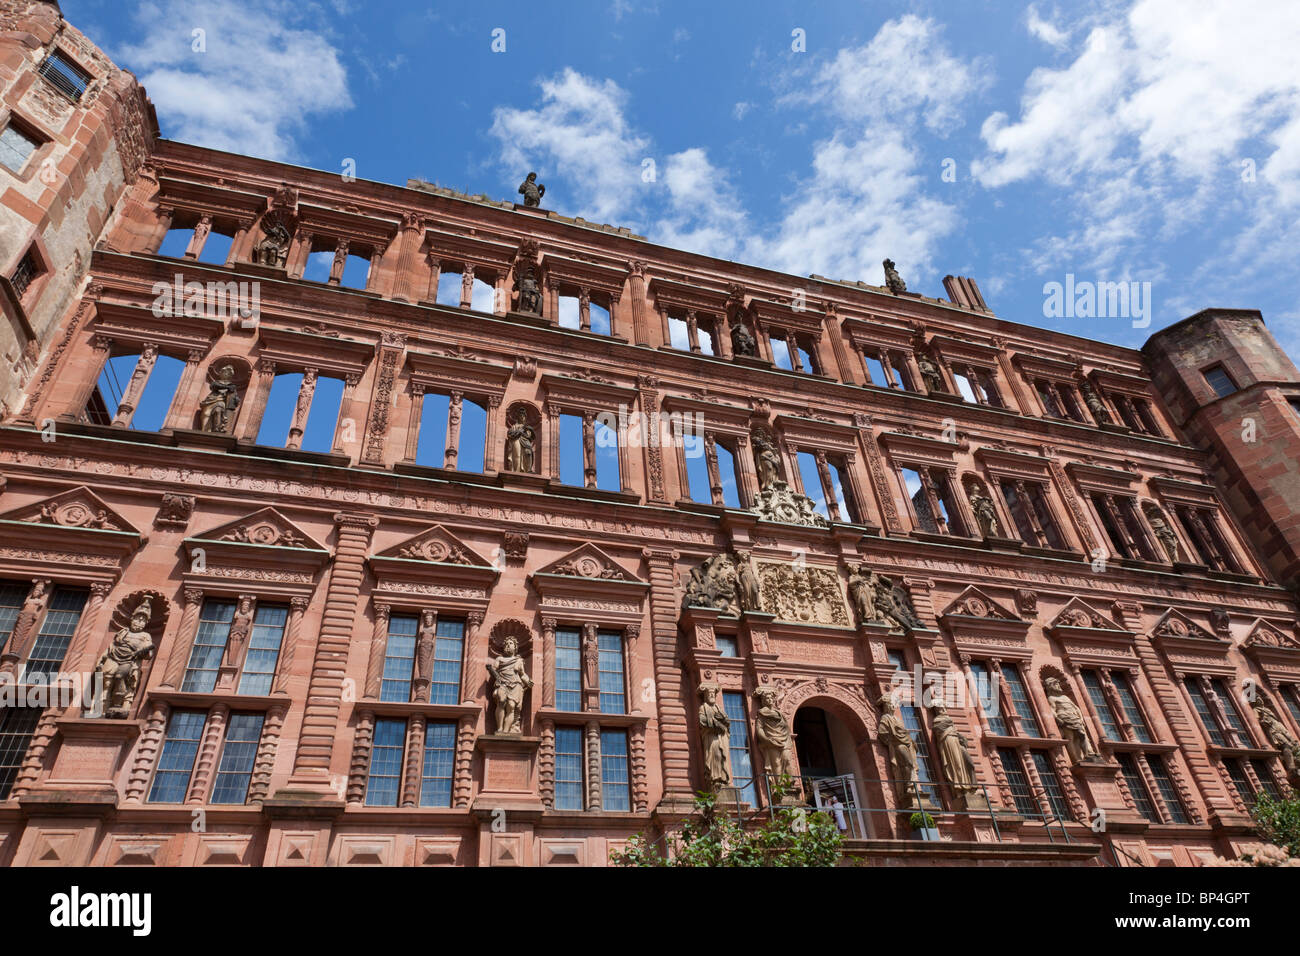 Historic landmark famous Heidelberg Castle, Baden-Wurttemberg Germany, travel destination, romantic medieval Renaissance, Gothic architecture, history Stock Photo